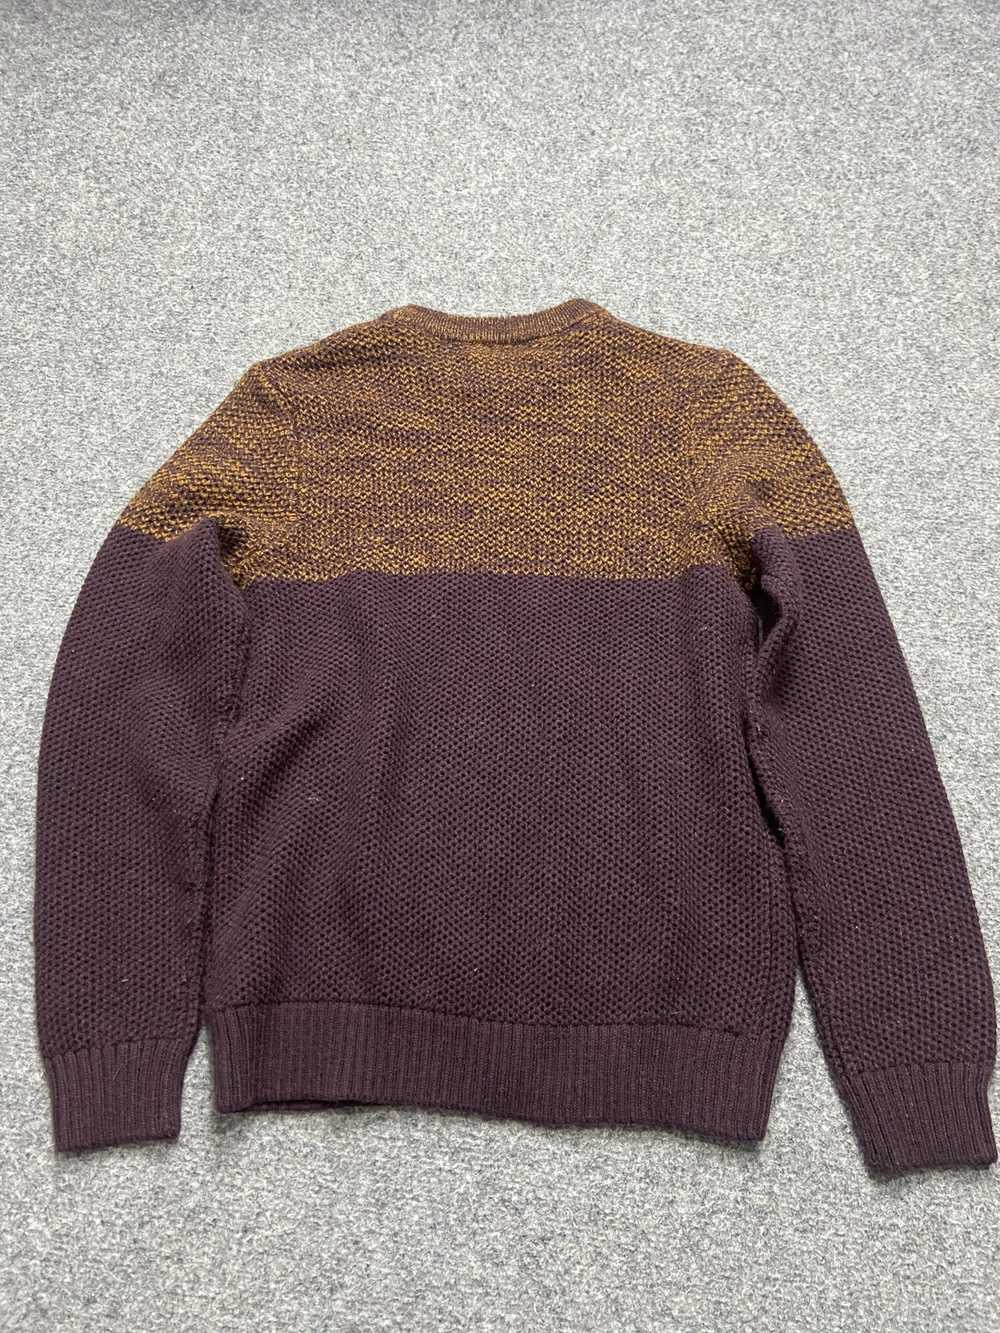 Folk Folk Knit Sweater - image 12